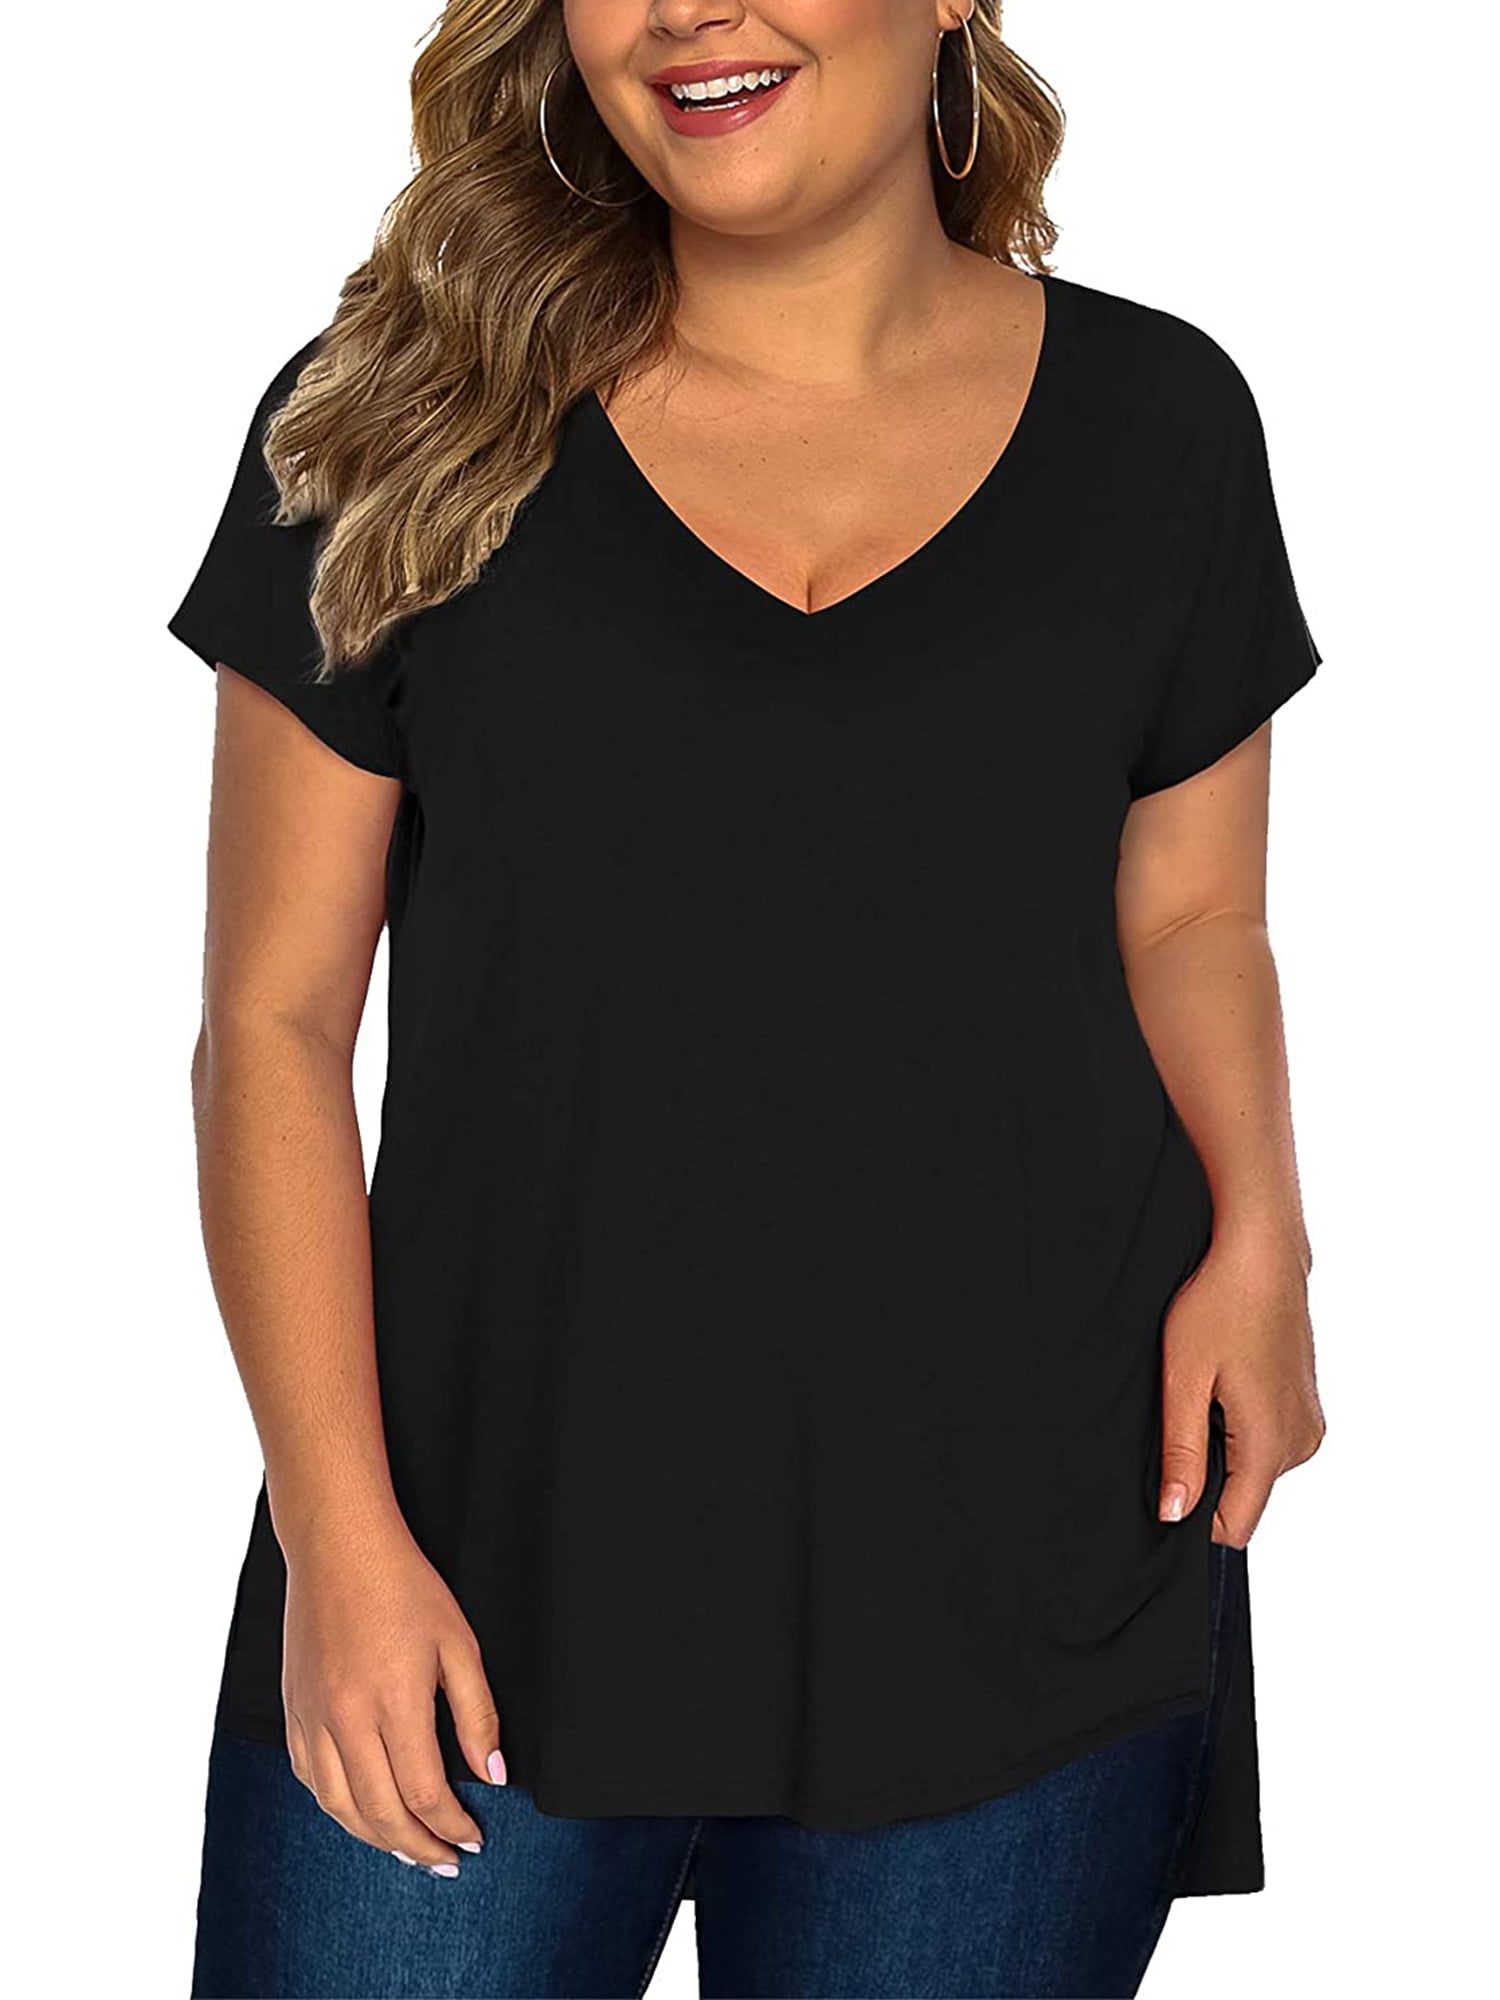 S-3X, Plus Sizes Regna X Womens 3 4 Sleeve Raglan Baseball Casual T-Shirts